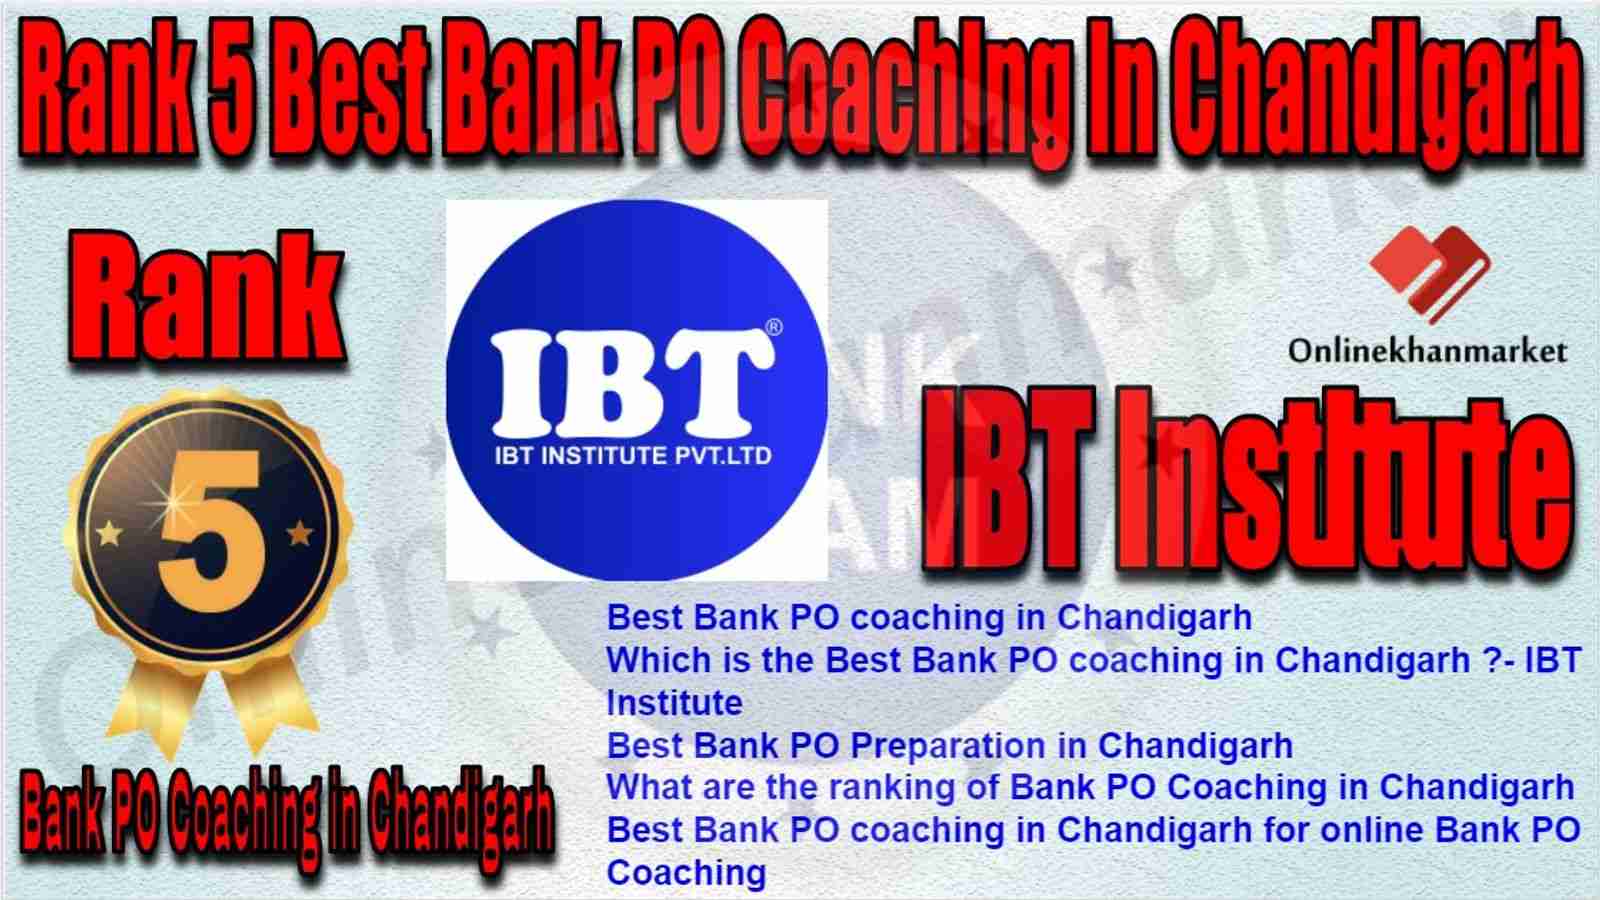 Rank 5 Best Bank PO Coaching in Chandigarh